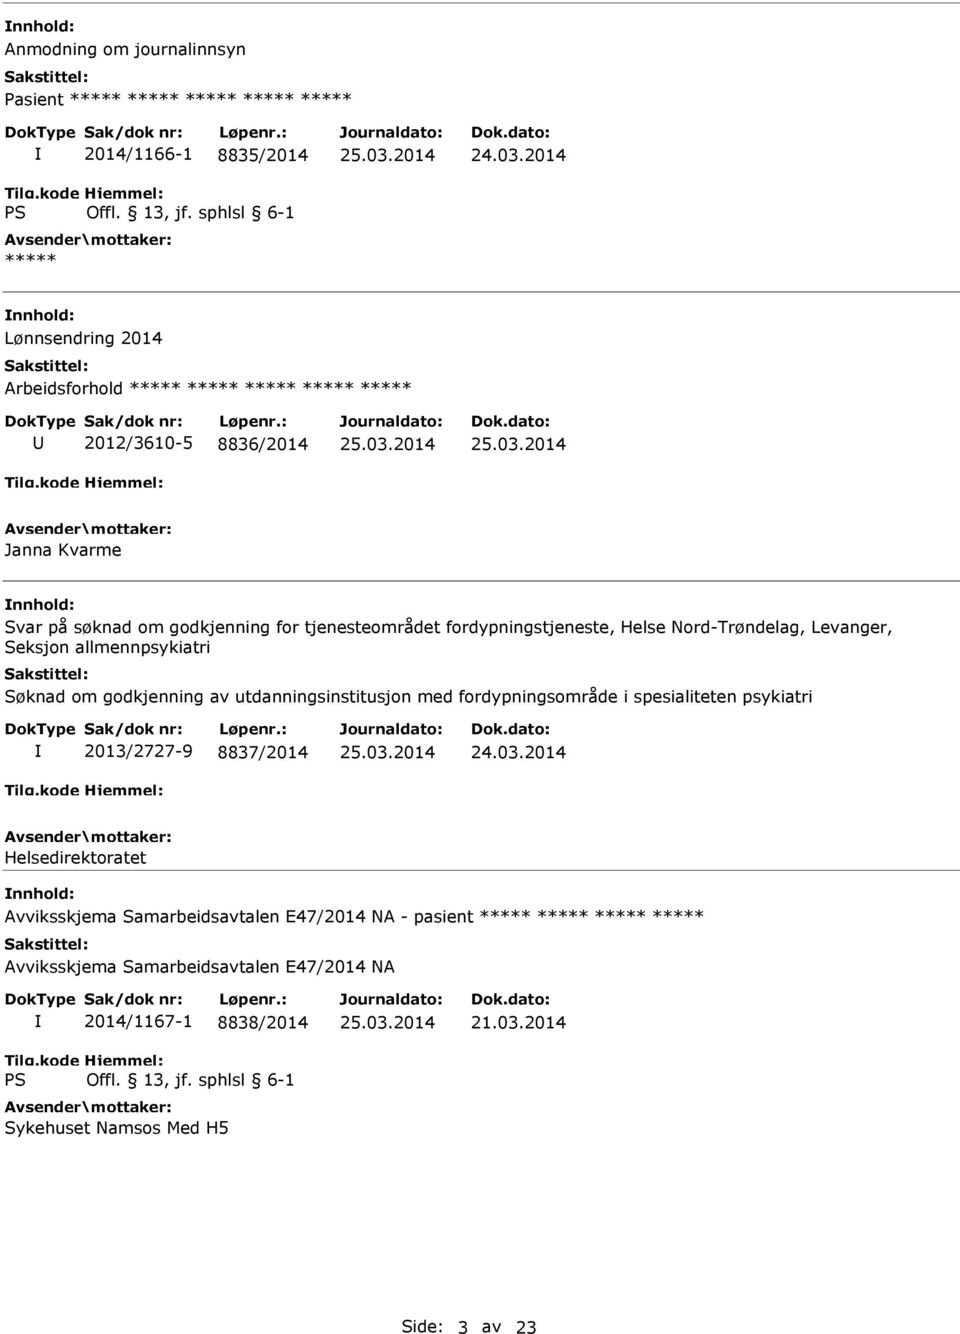 allmennpsykiatri Søknad om godkjenning av utdanningsinstitusjon med fordypningsområde i spesialiteten psykiatri 2013/2727-9 8837/2014 Helsedirektoratet